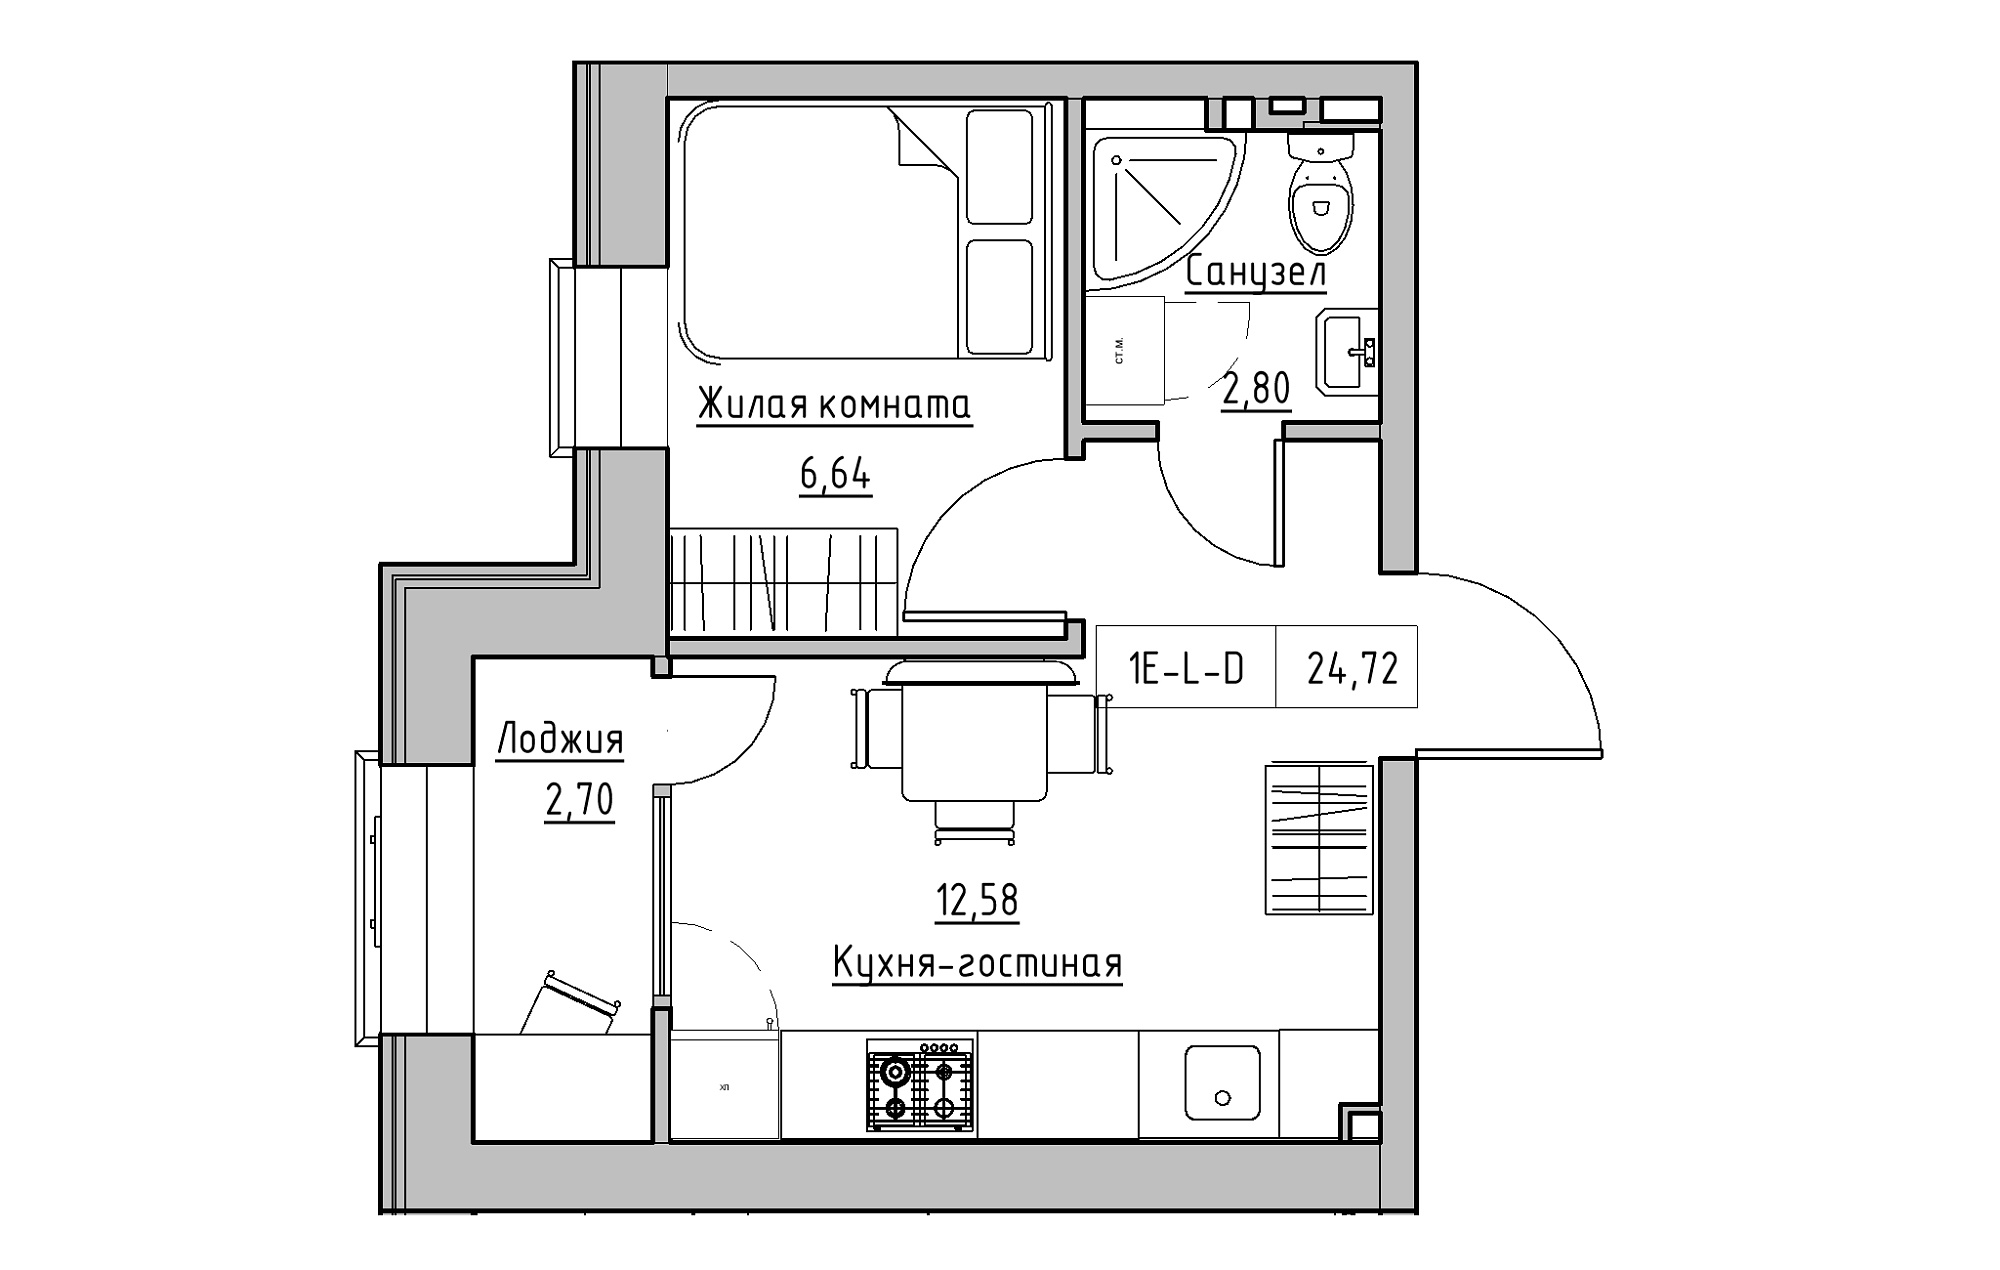 Planning 1-rm flats area 24.72m2, KS-018-02/0013.